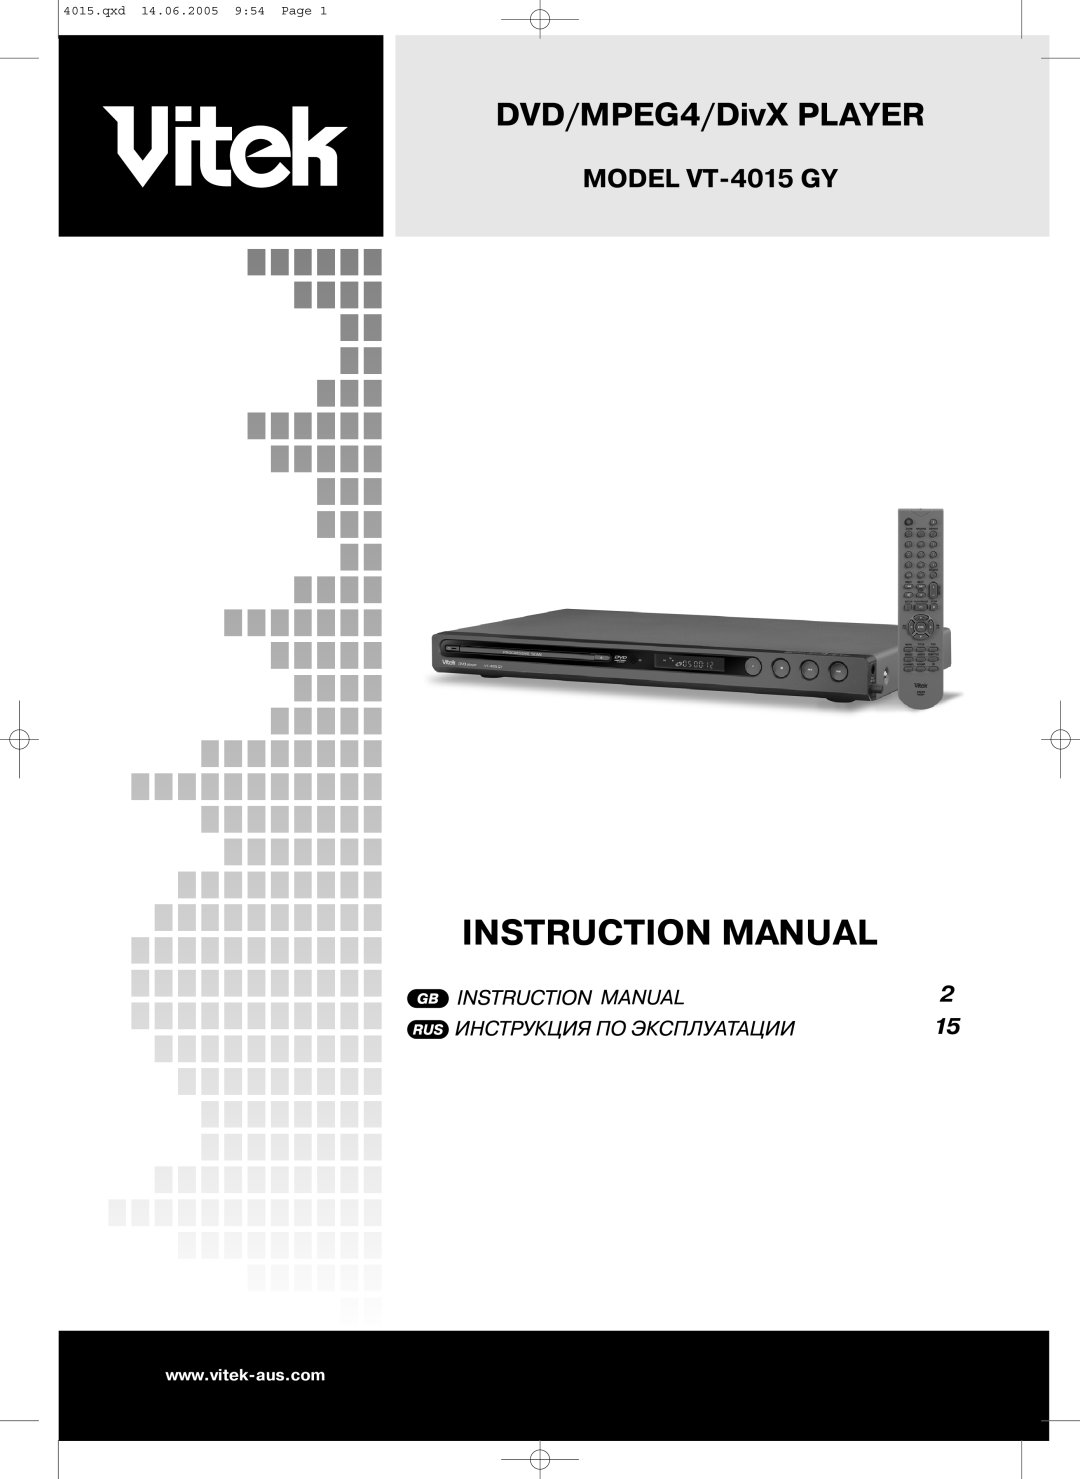 LG Electronics VT 4015 instruction manual Instruction Manual, DVD/MPEG4/DivX PLAYER, MODEL VT15 GY 